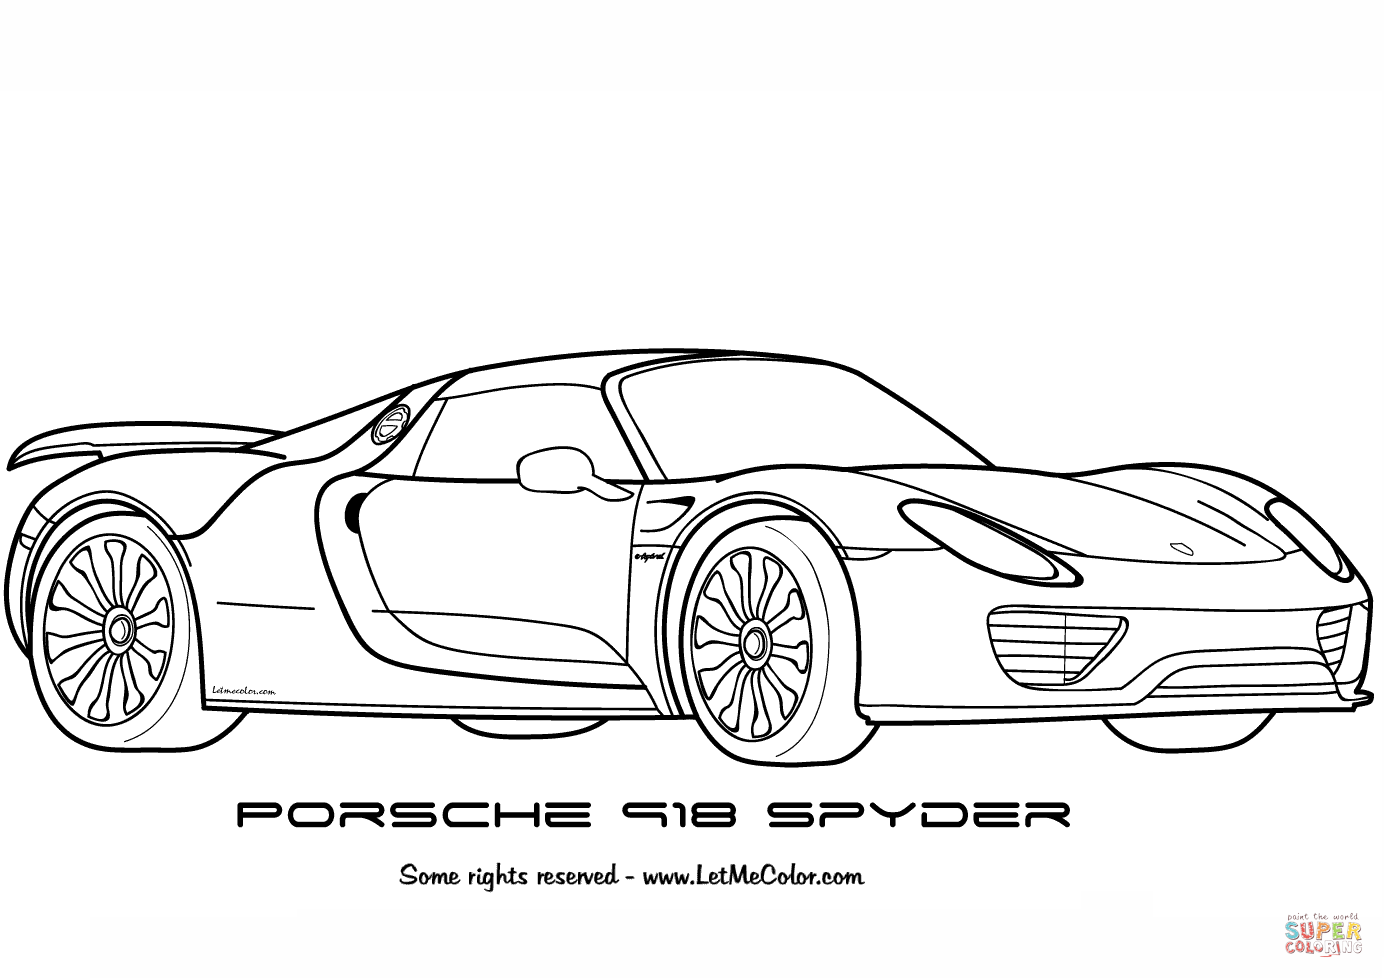 Porsche 918 Spyder Super Coloring Cars Coloring Pages Coloring Pages Race Car Colorin